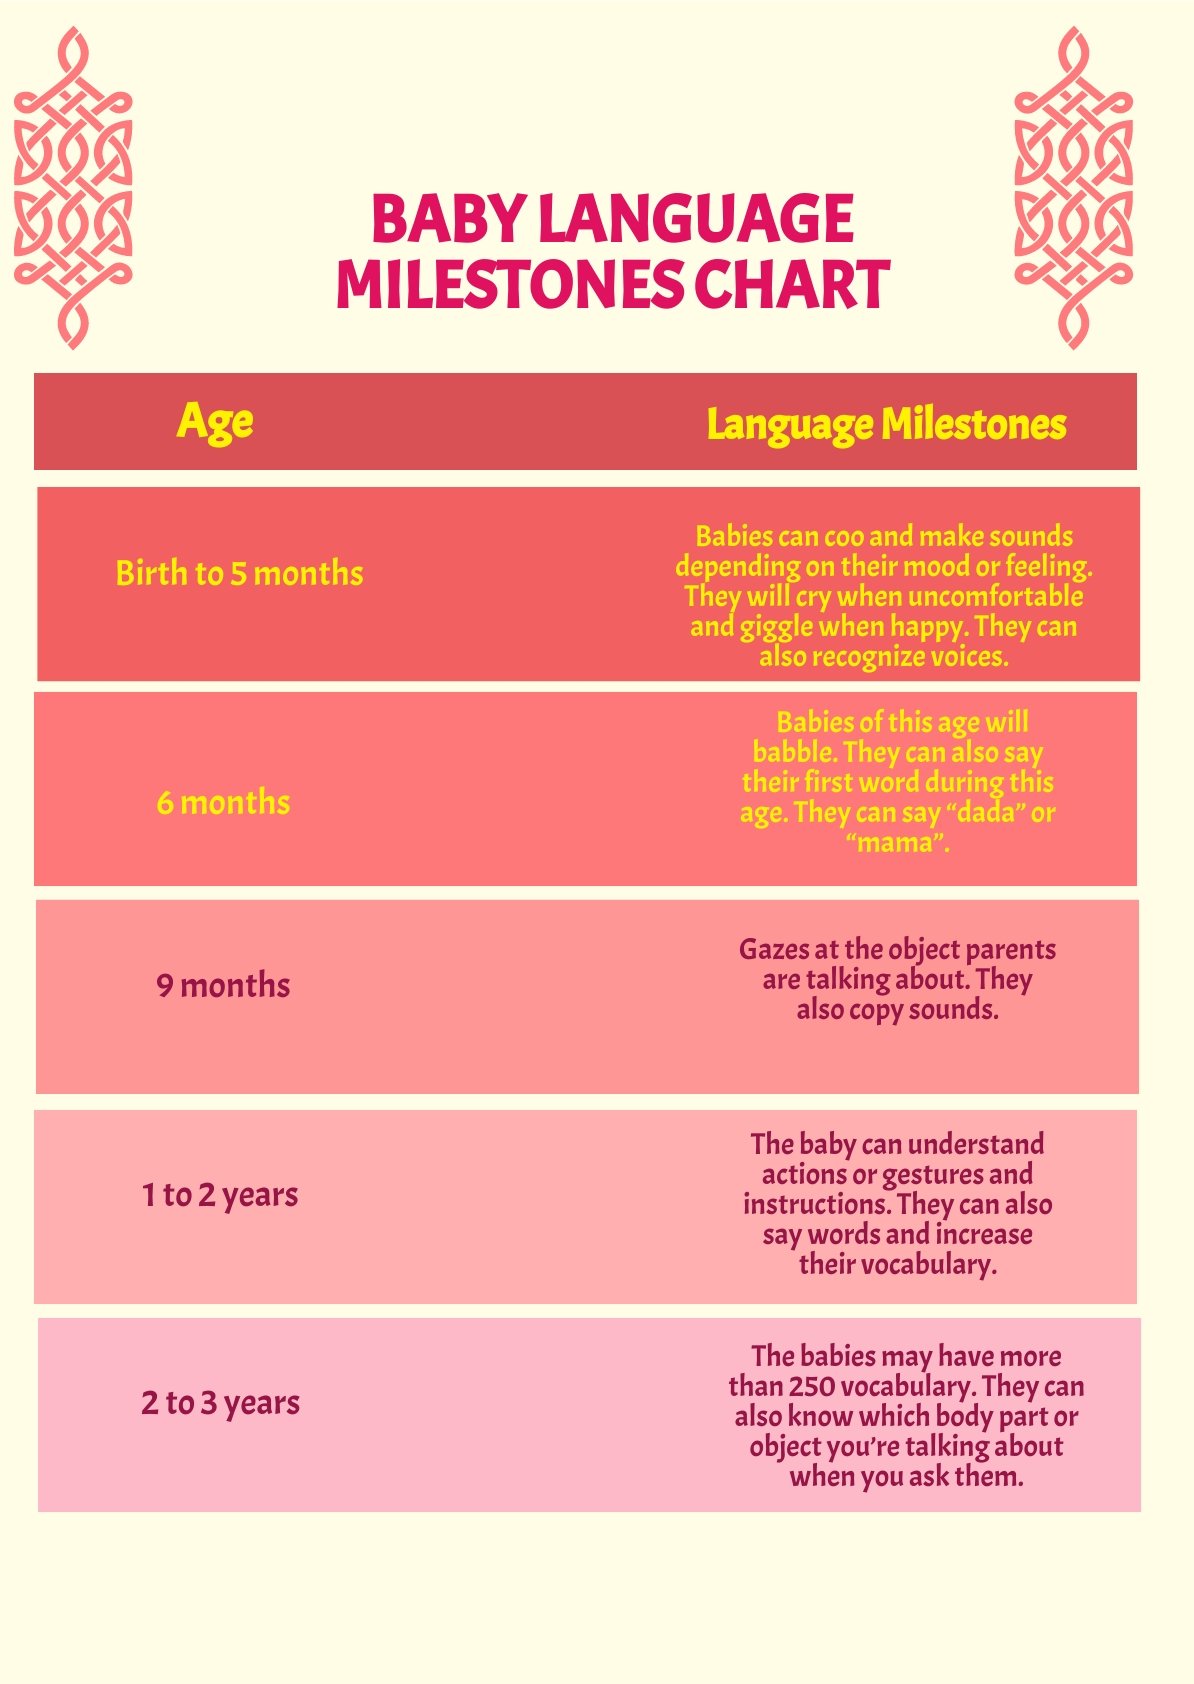 `Baby Language Milestones Chart